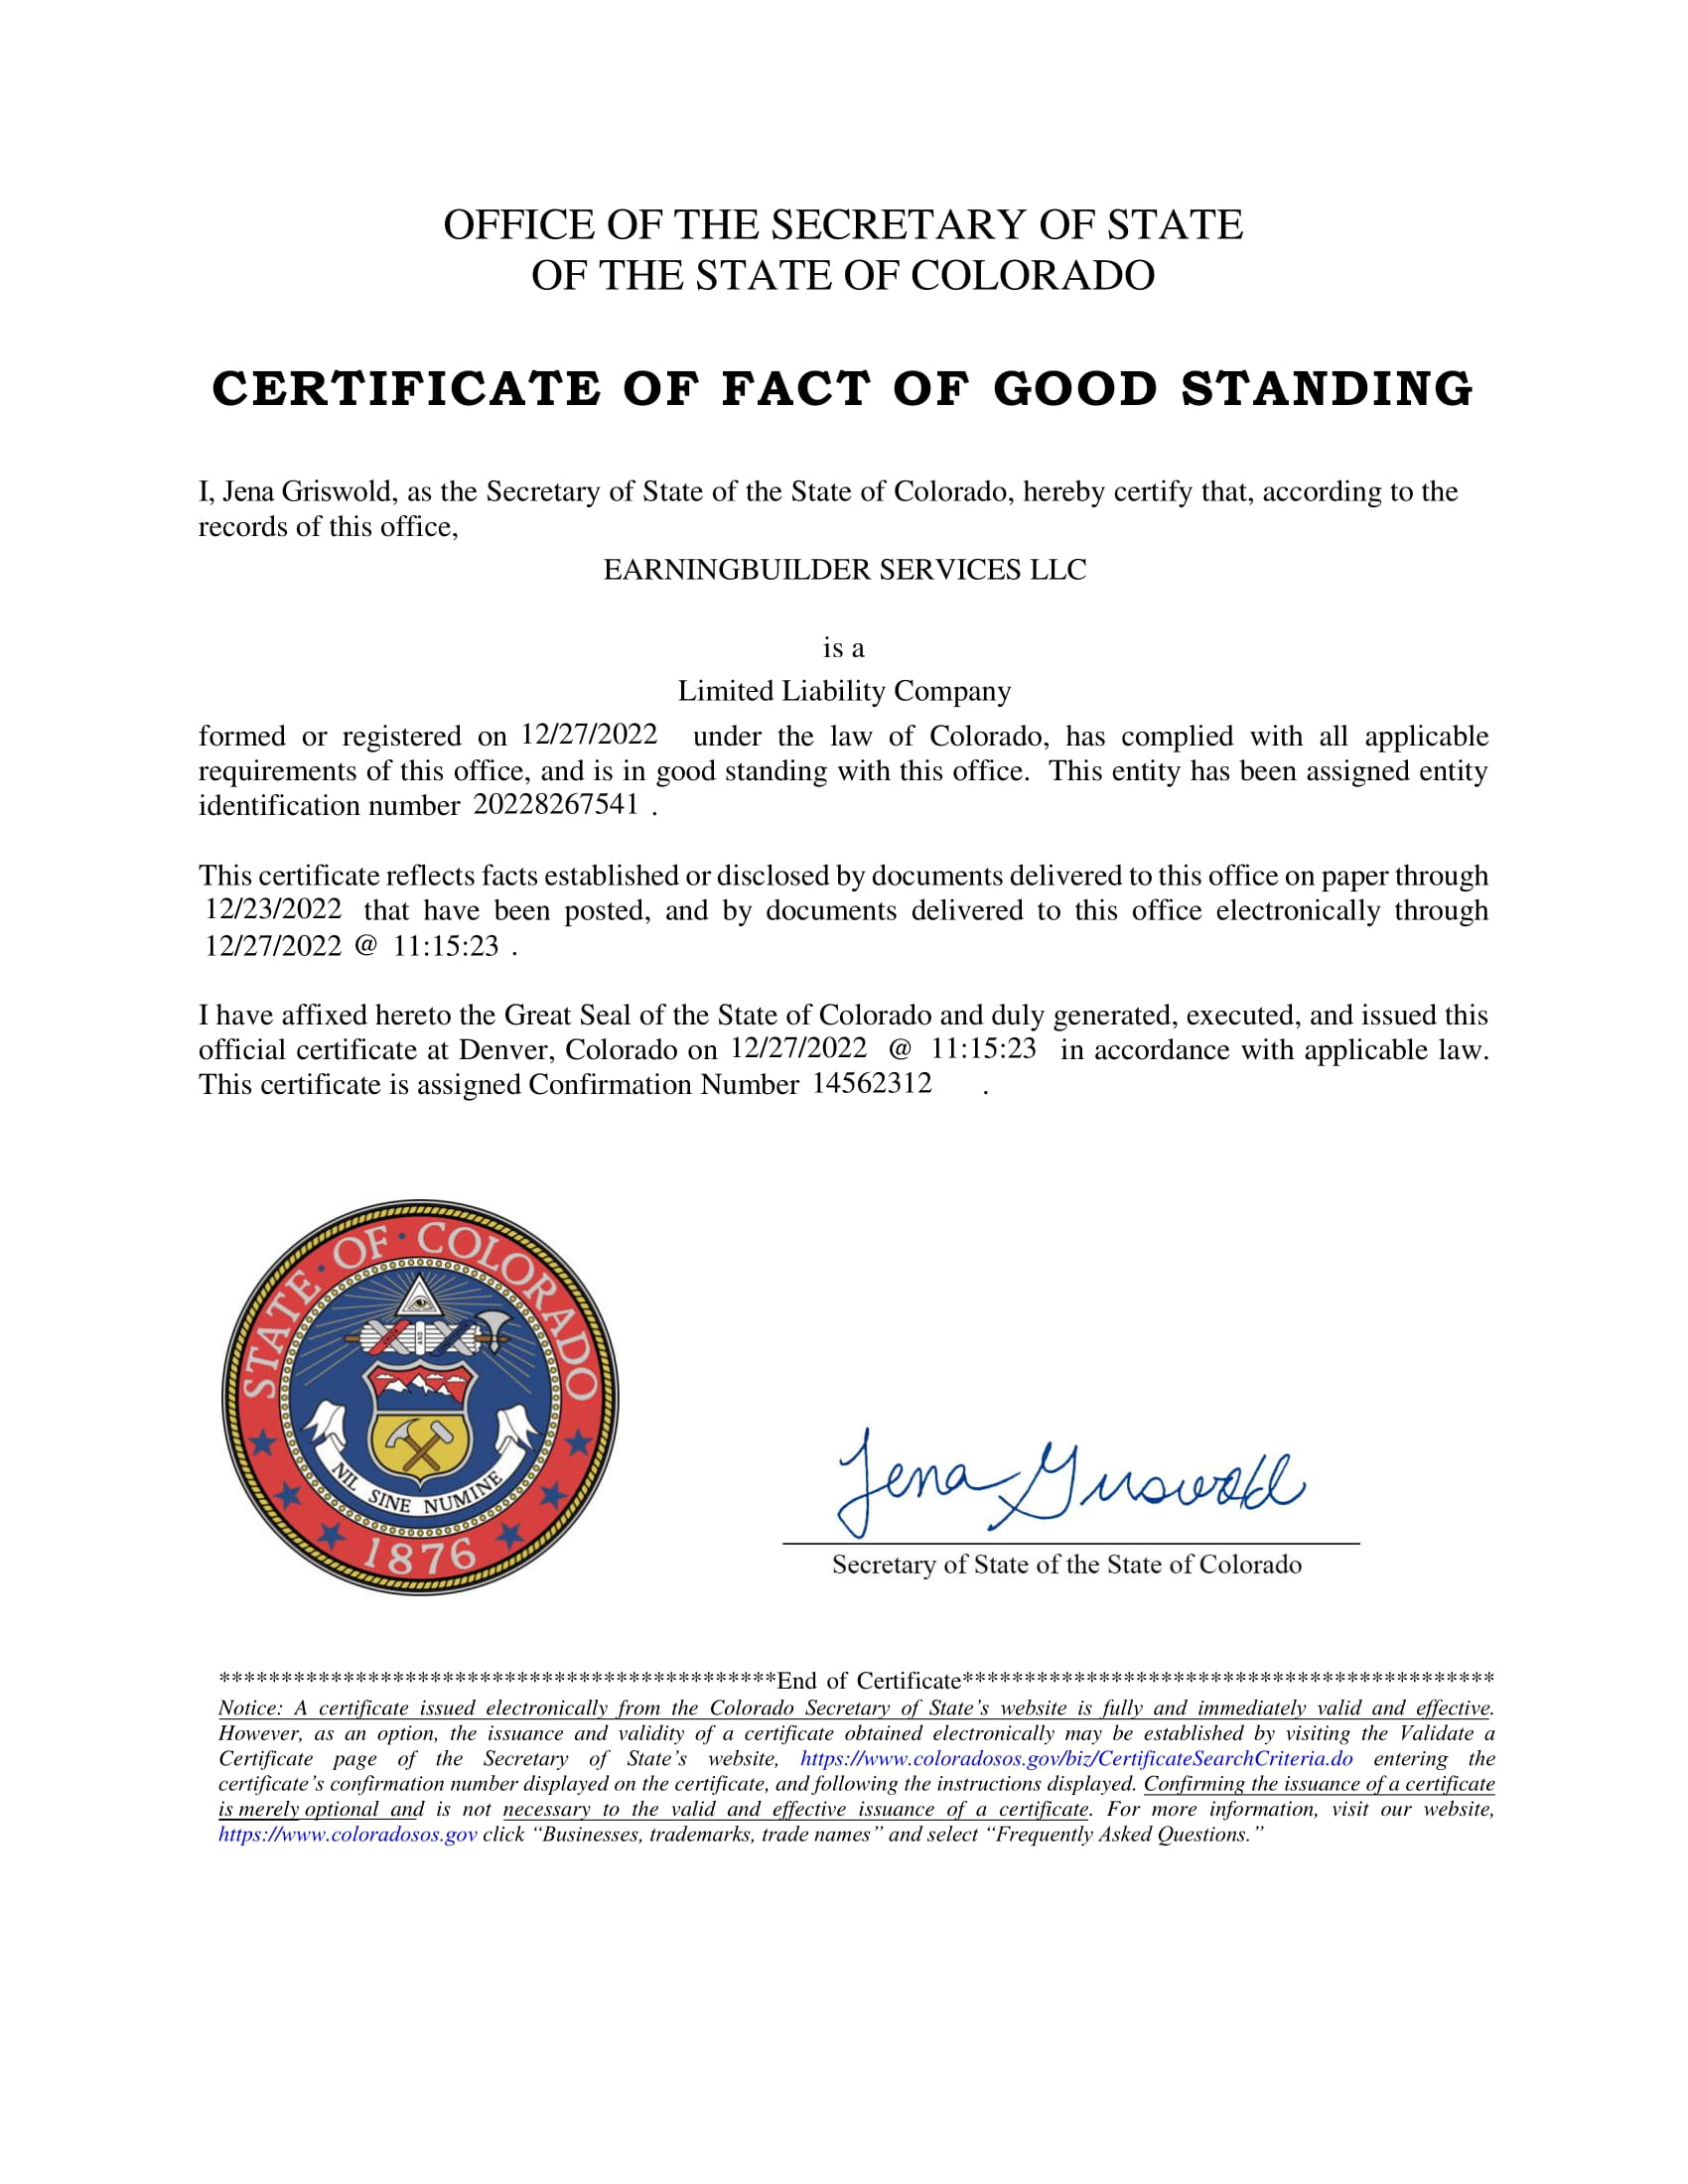 Certificate of Good Standing